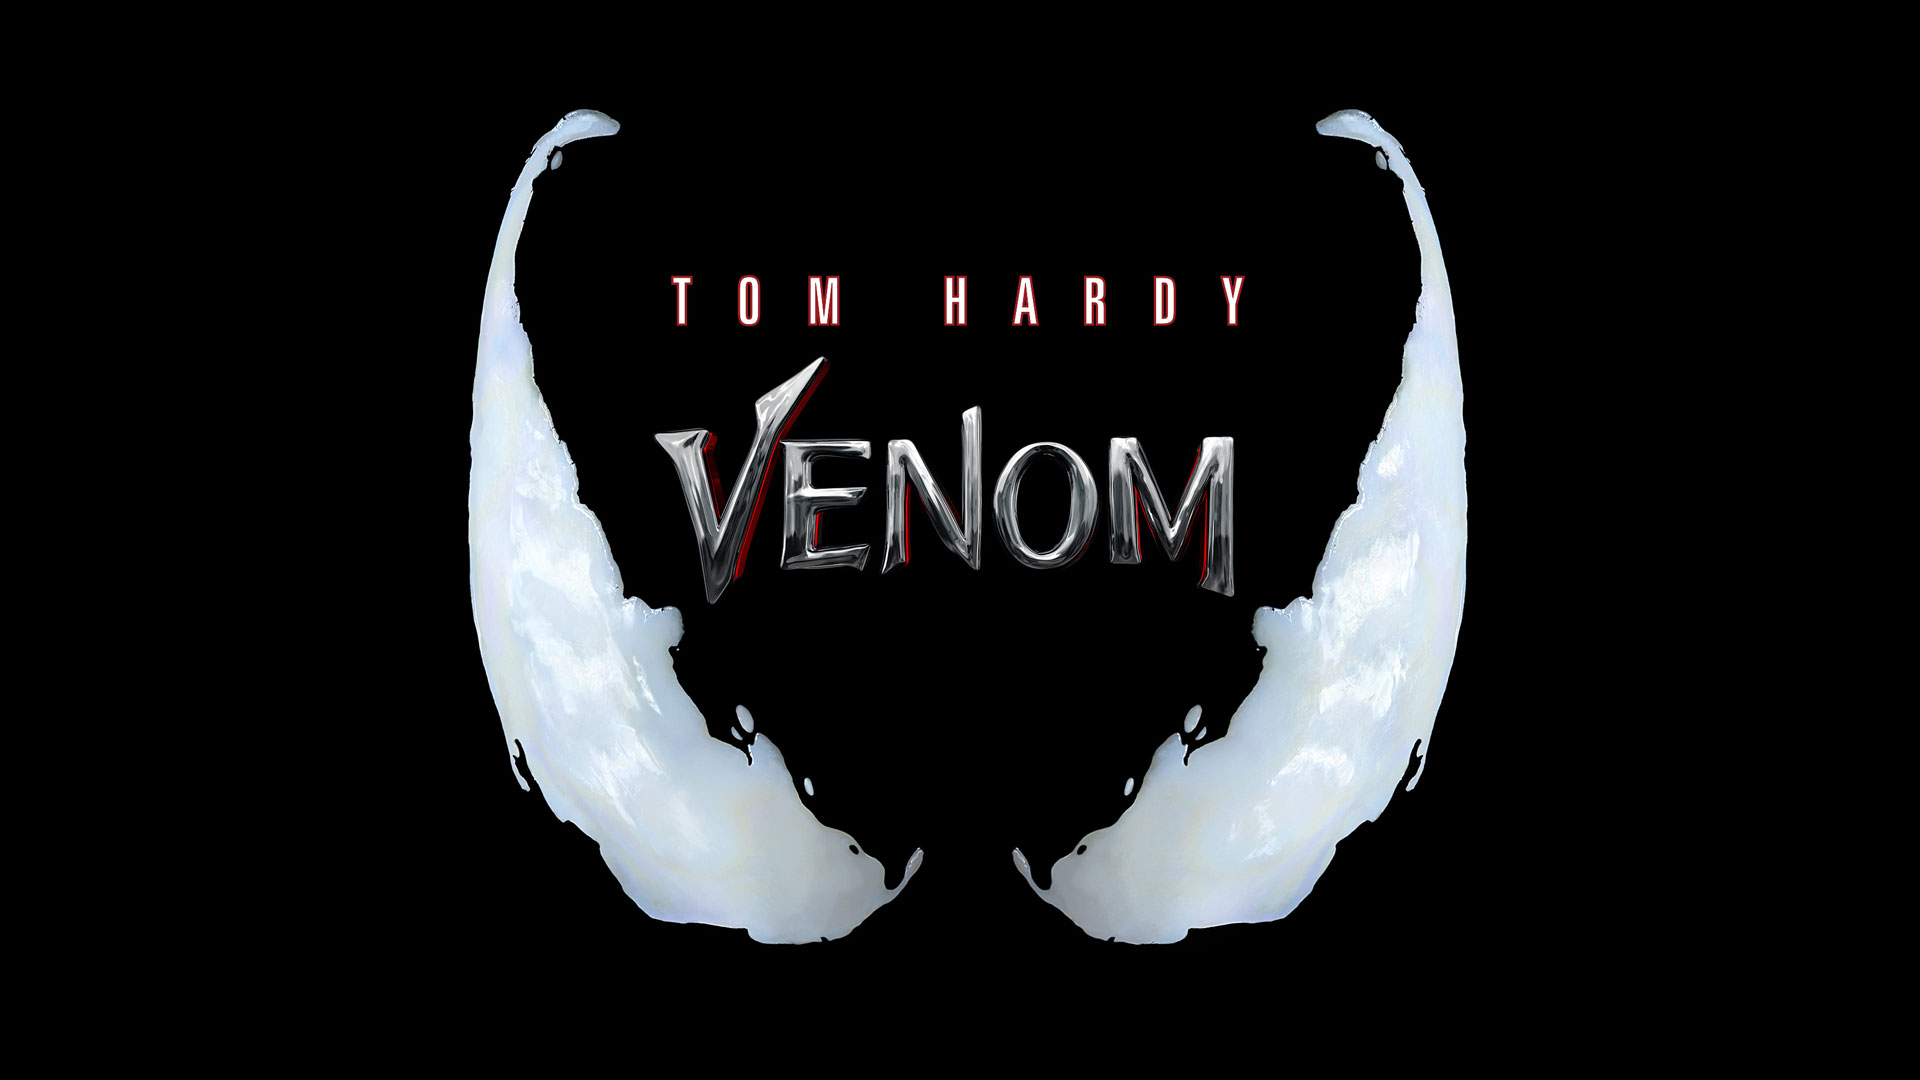 venom movie 2018 tom hardy featured image